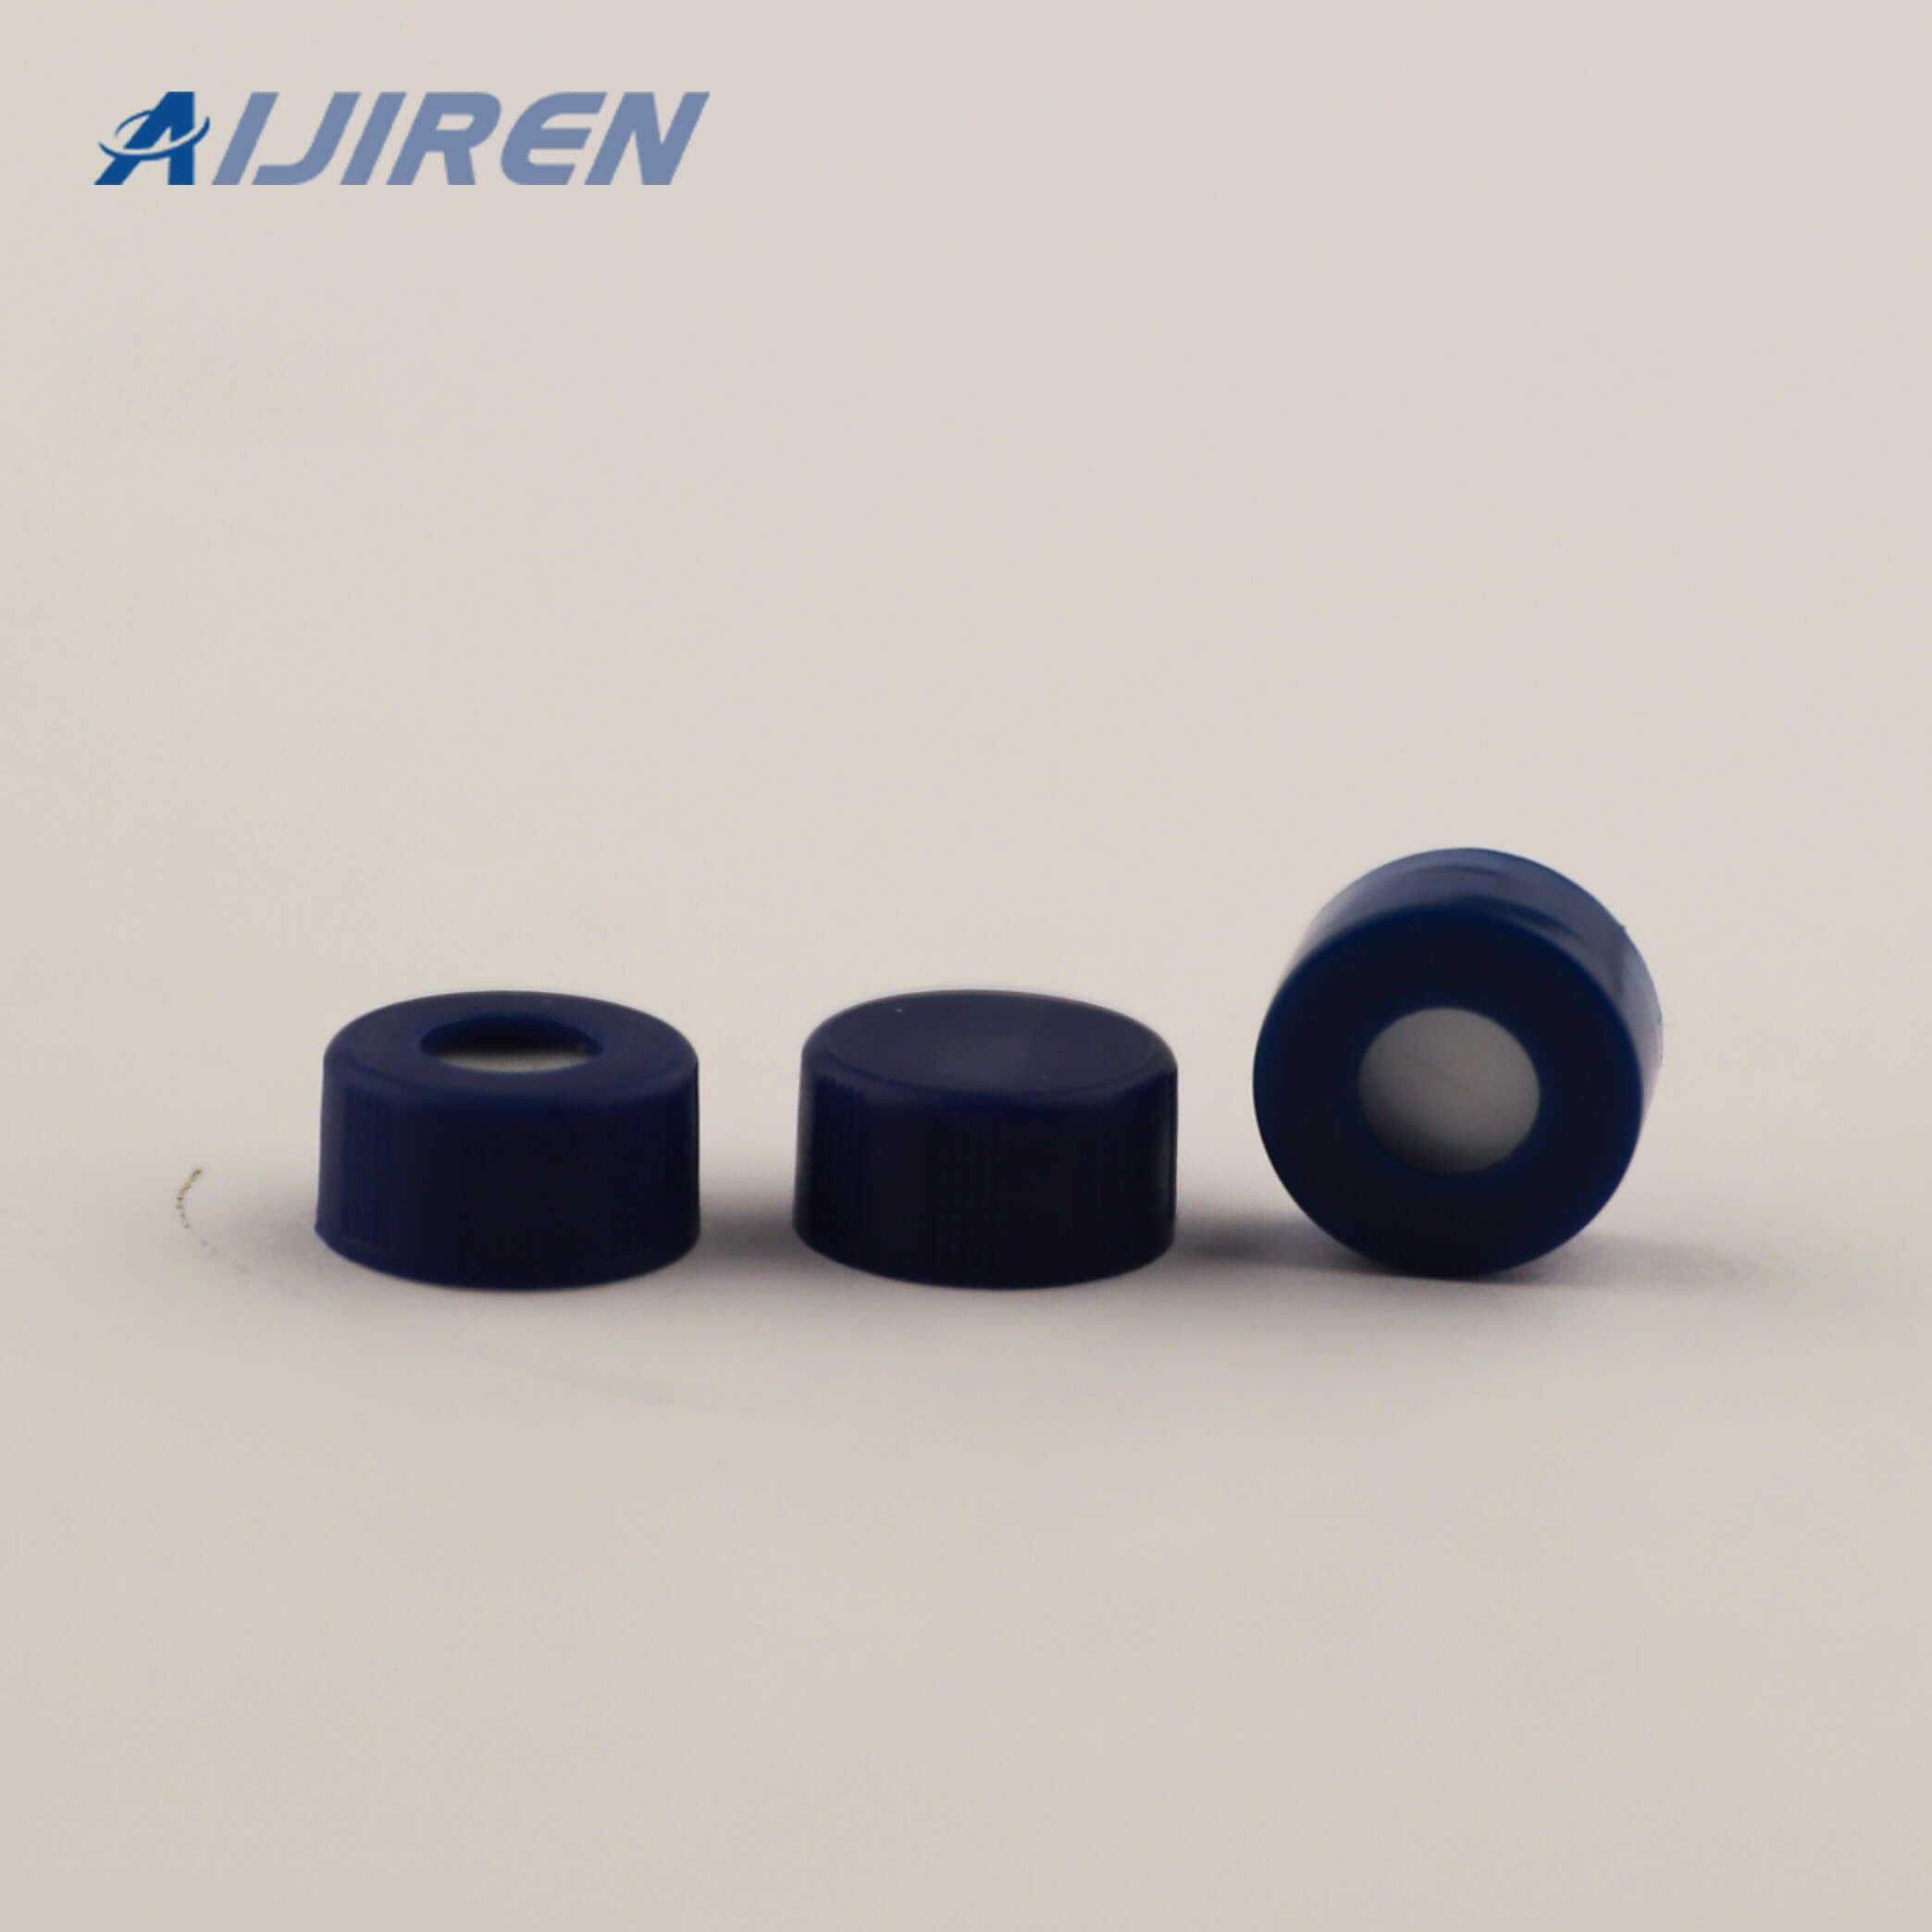 9mm Screw Thread Caps from Aijiren